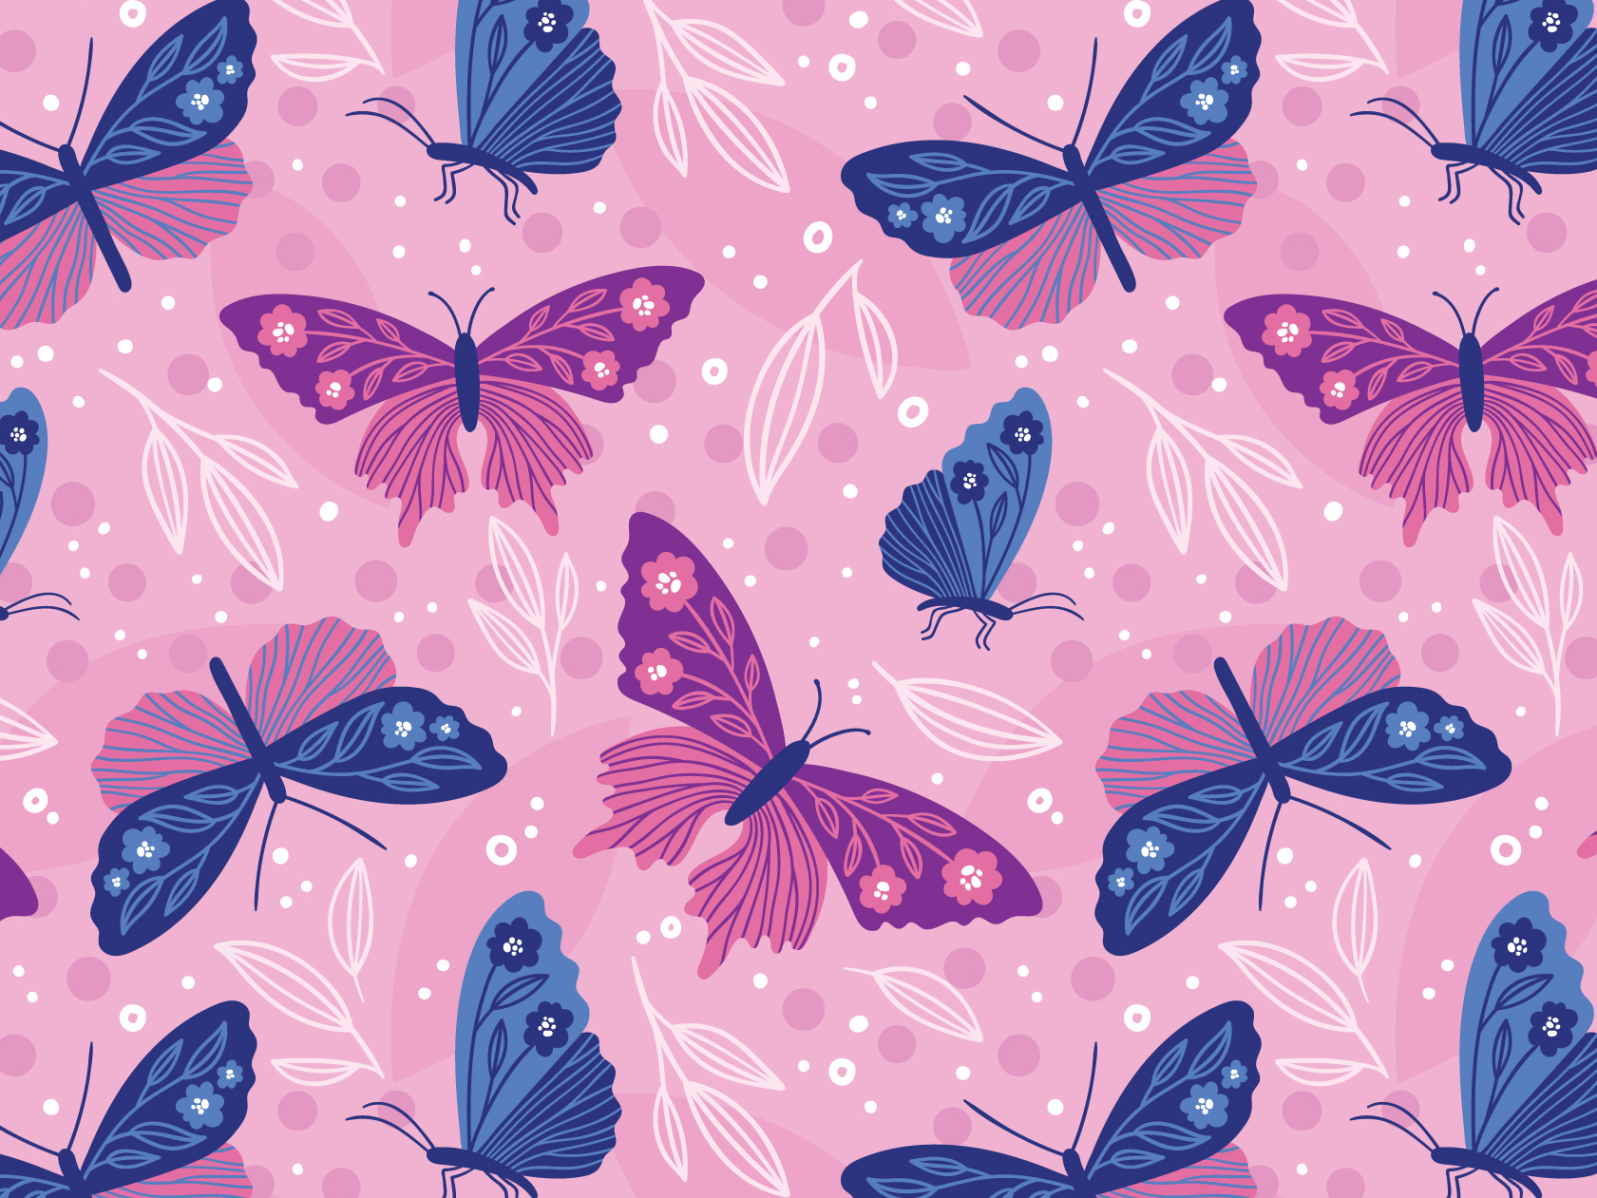 Butterflies by Jessica Gunderson on Dribbble